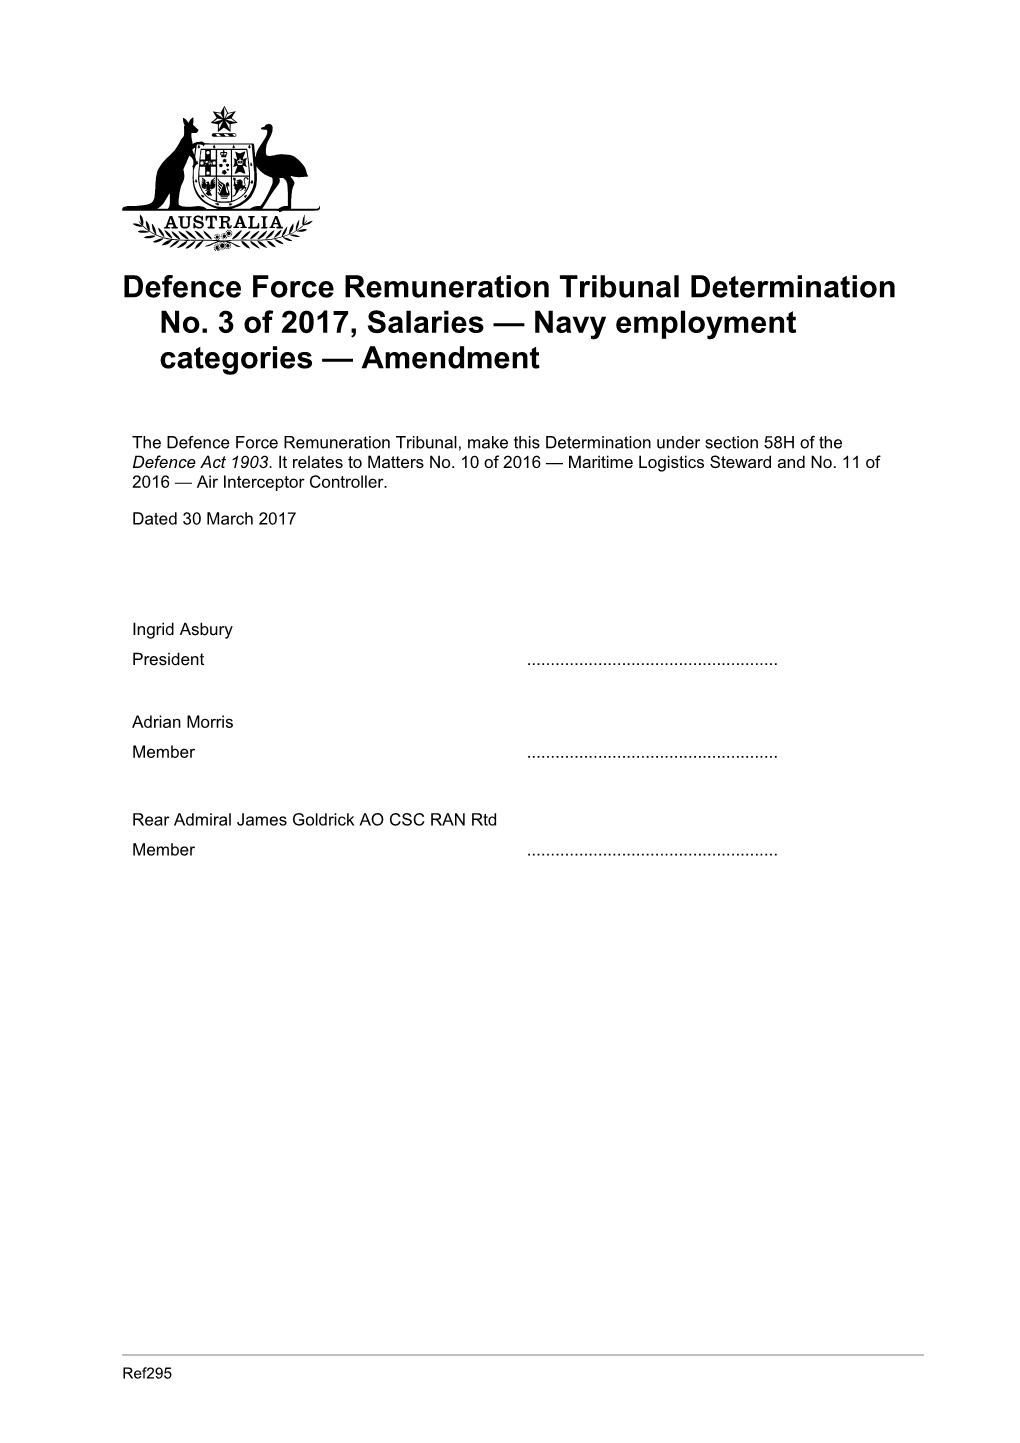 Defence Force Remuneration Tribunal Determination No. 3 of 2017, Salaries Navy Employment